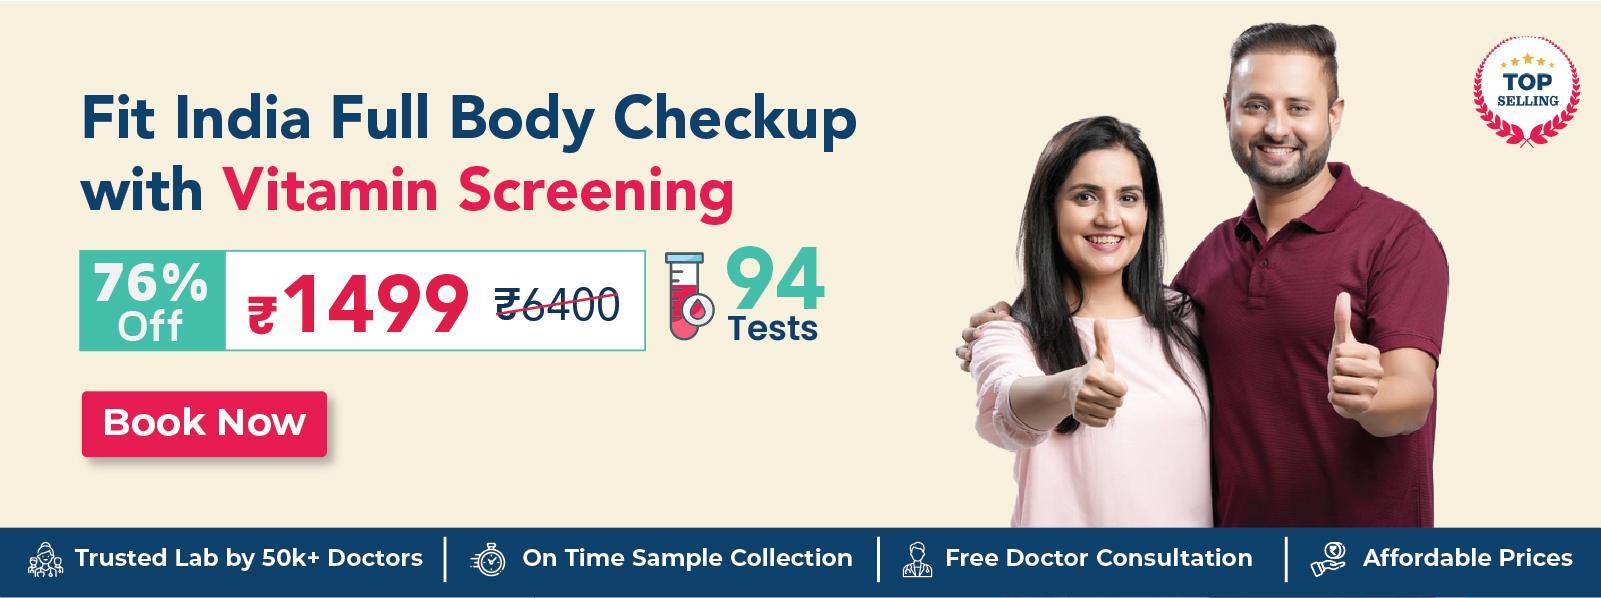 Fit India Full Body checkup with Vitamin Screening in Ludhiana